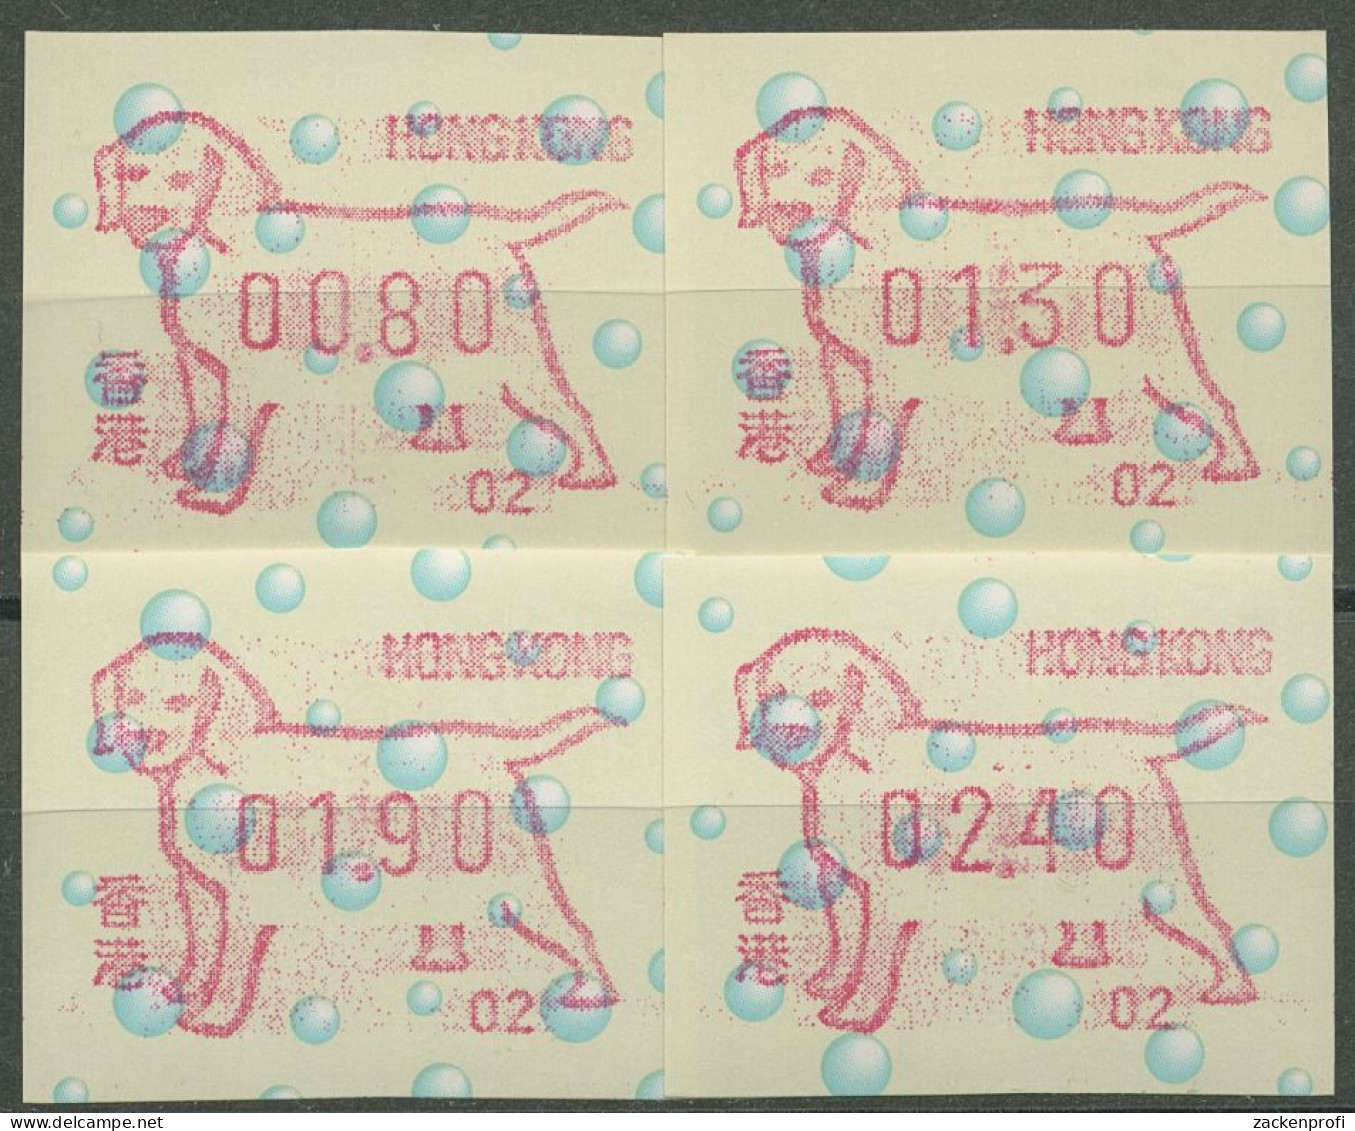 Hongkong 1994 Jahr Des Hundes Automatenmarke 9.1 S1.2 Automat 02 Postfrisch - Distributeurs